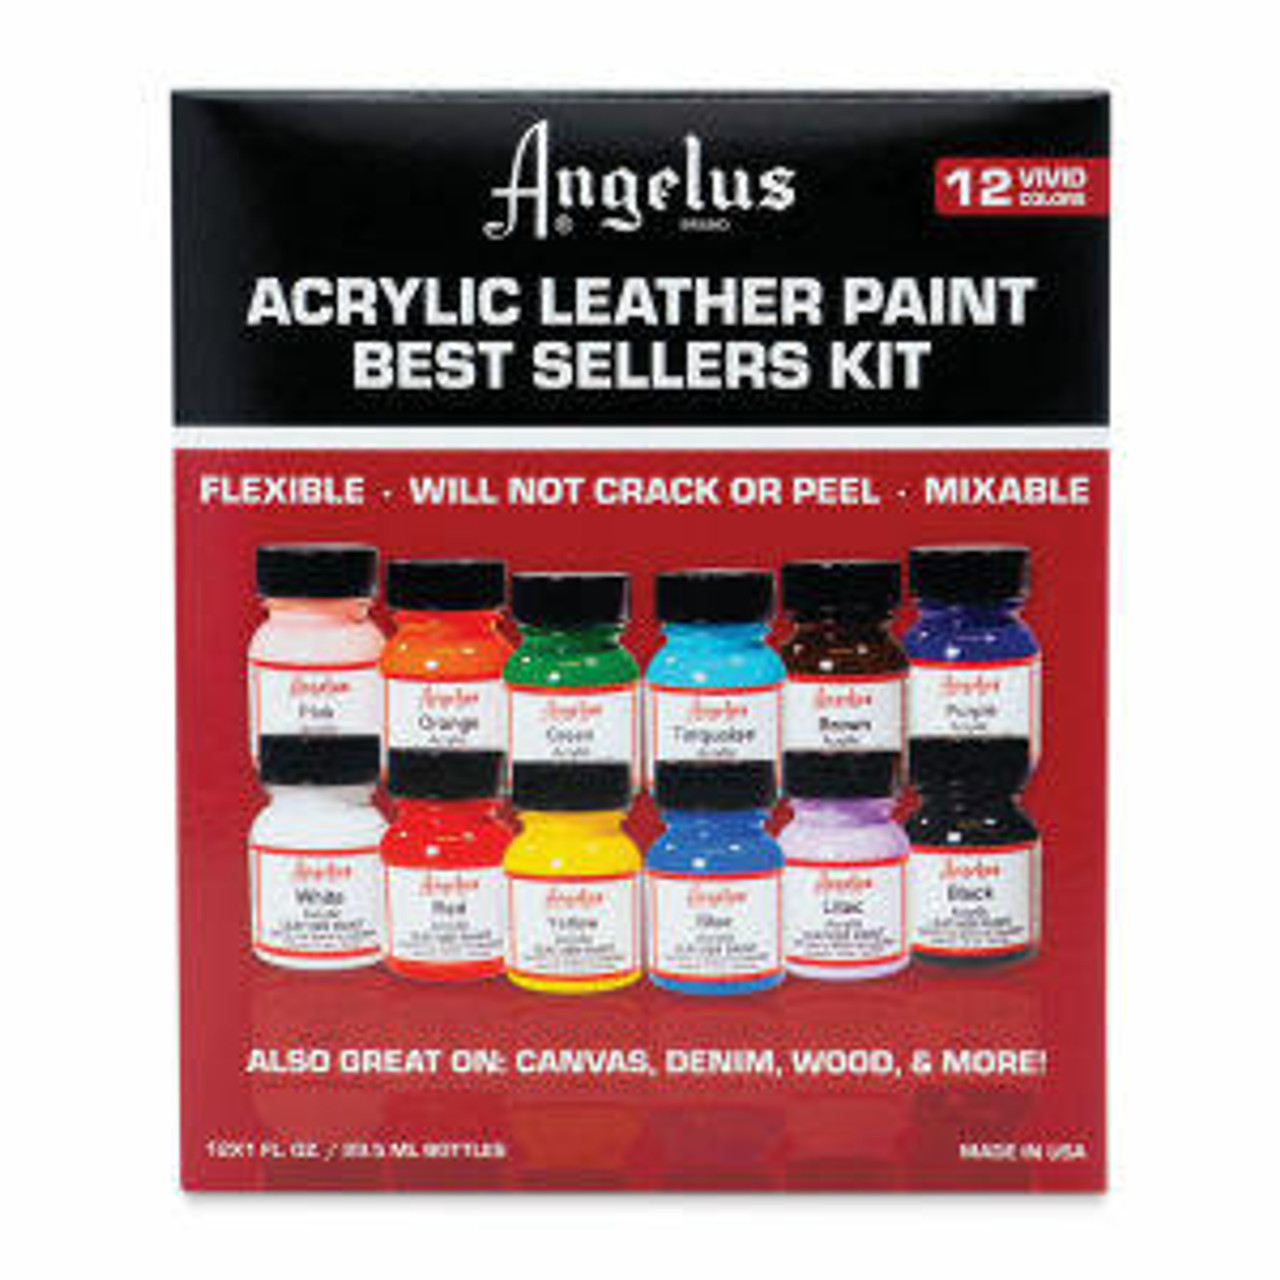 Angelus Acrylic Leather Paint Vachetta 1oz